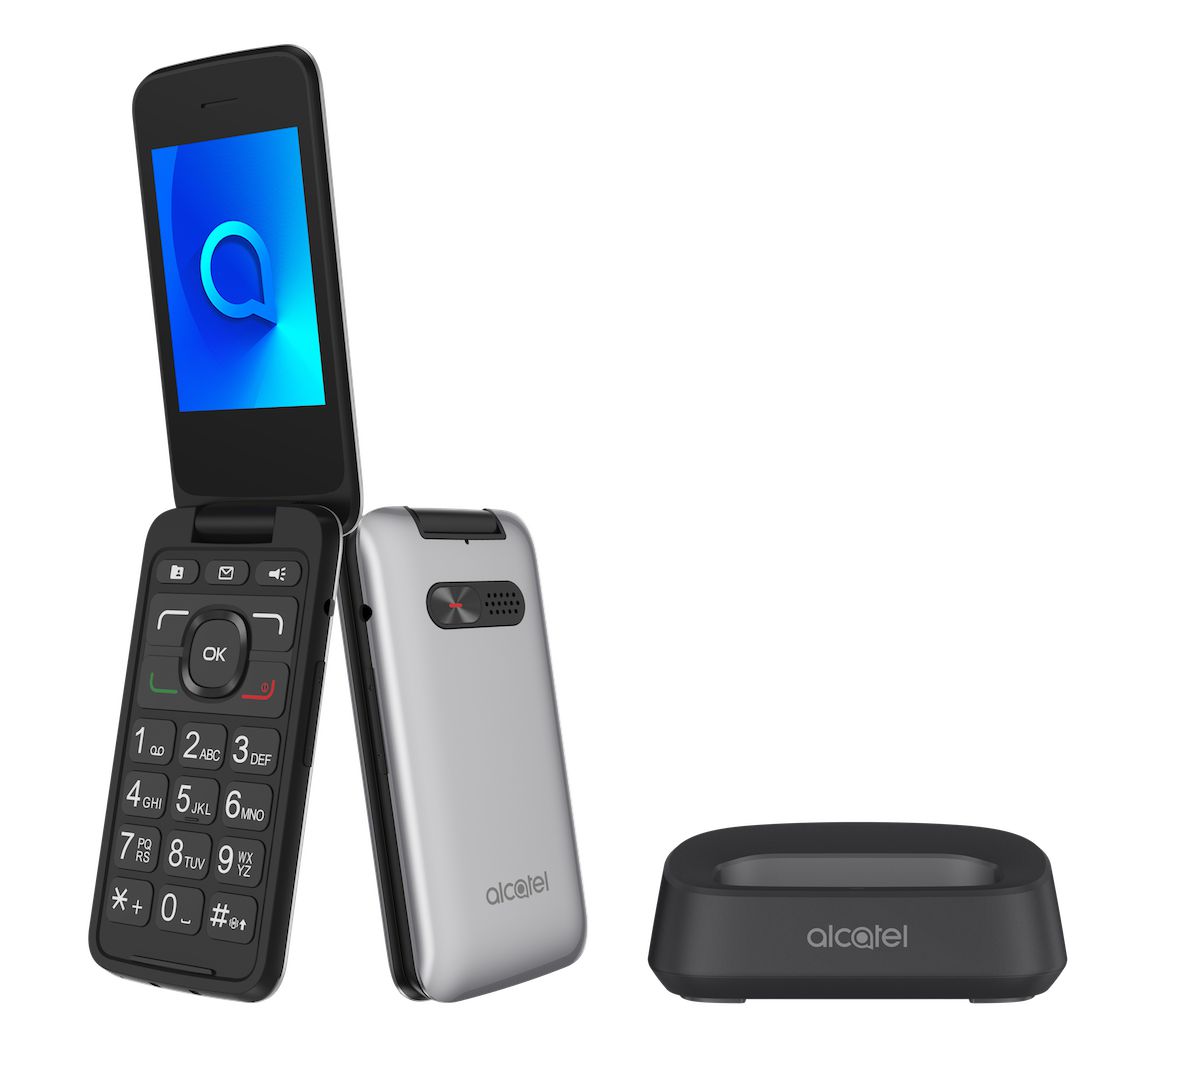 Alcatel 3026, Alcatel 3025 and Alcatel 2003 Feature Phones Announced